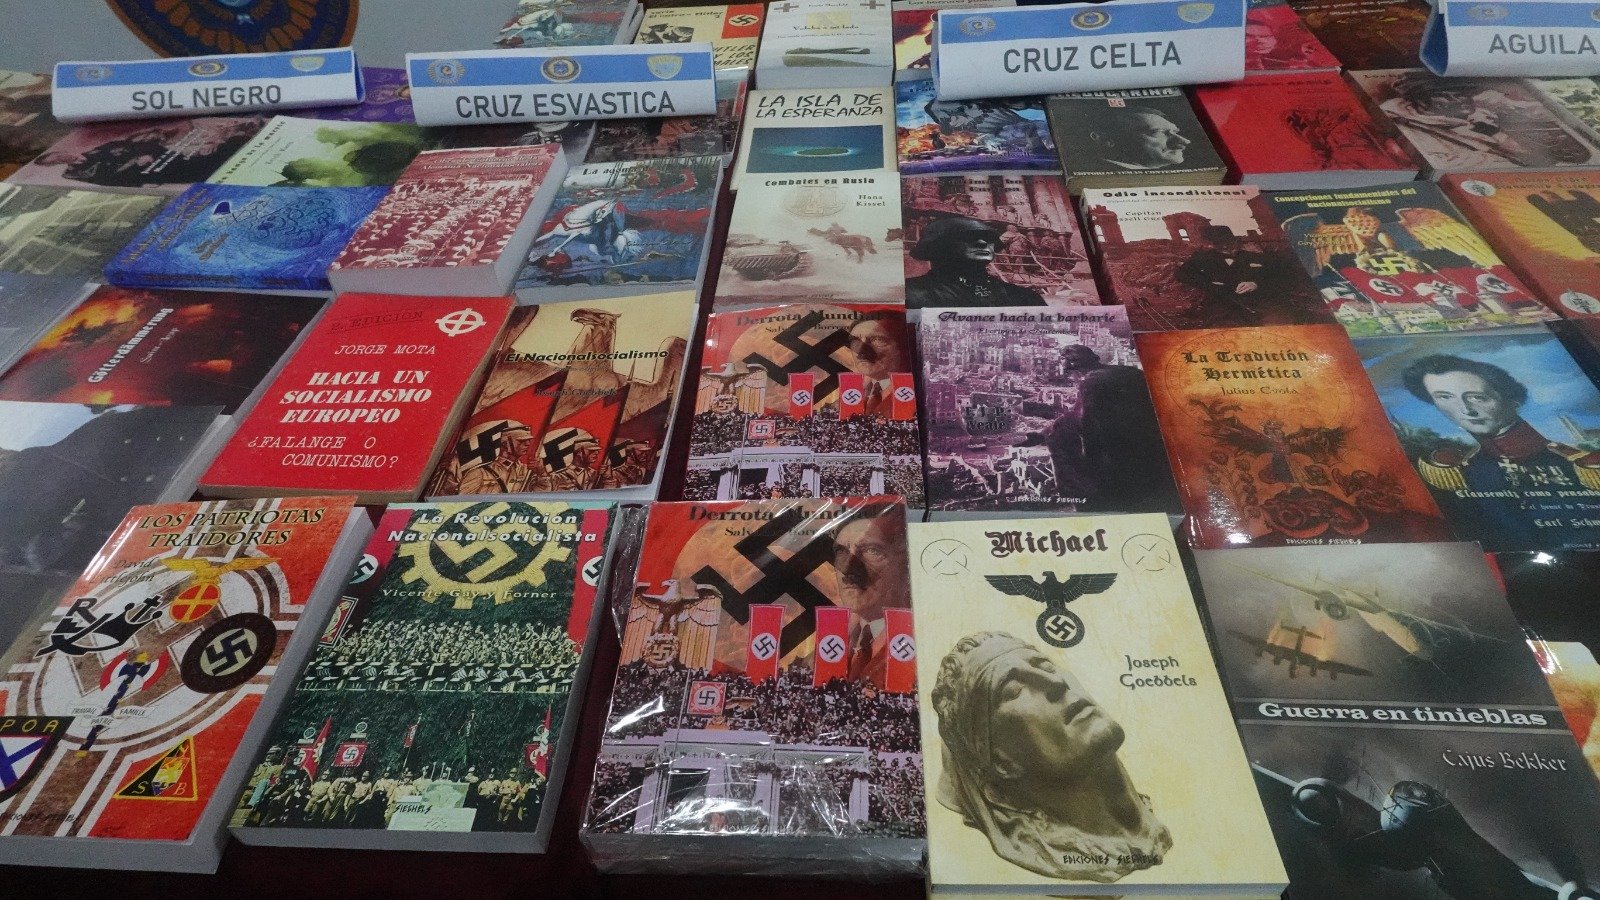 Police display books seized in the raid on Libreria Argentina, accused of selling Nazi propaganda. (Courtesy DAIA)